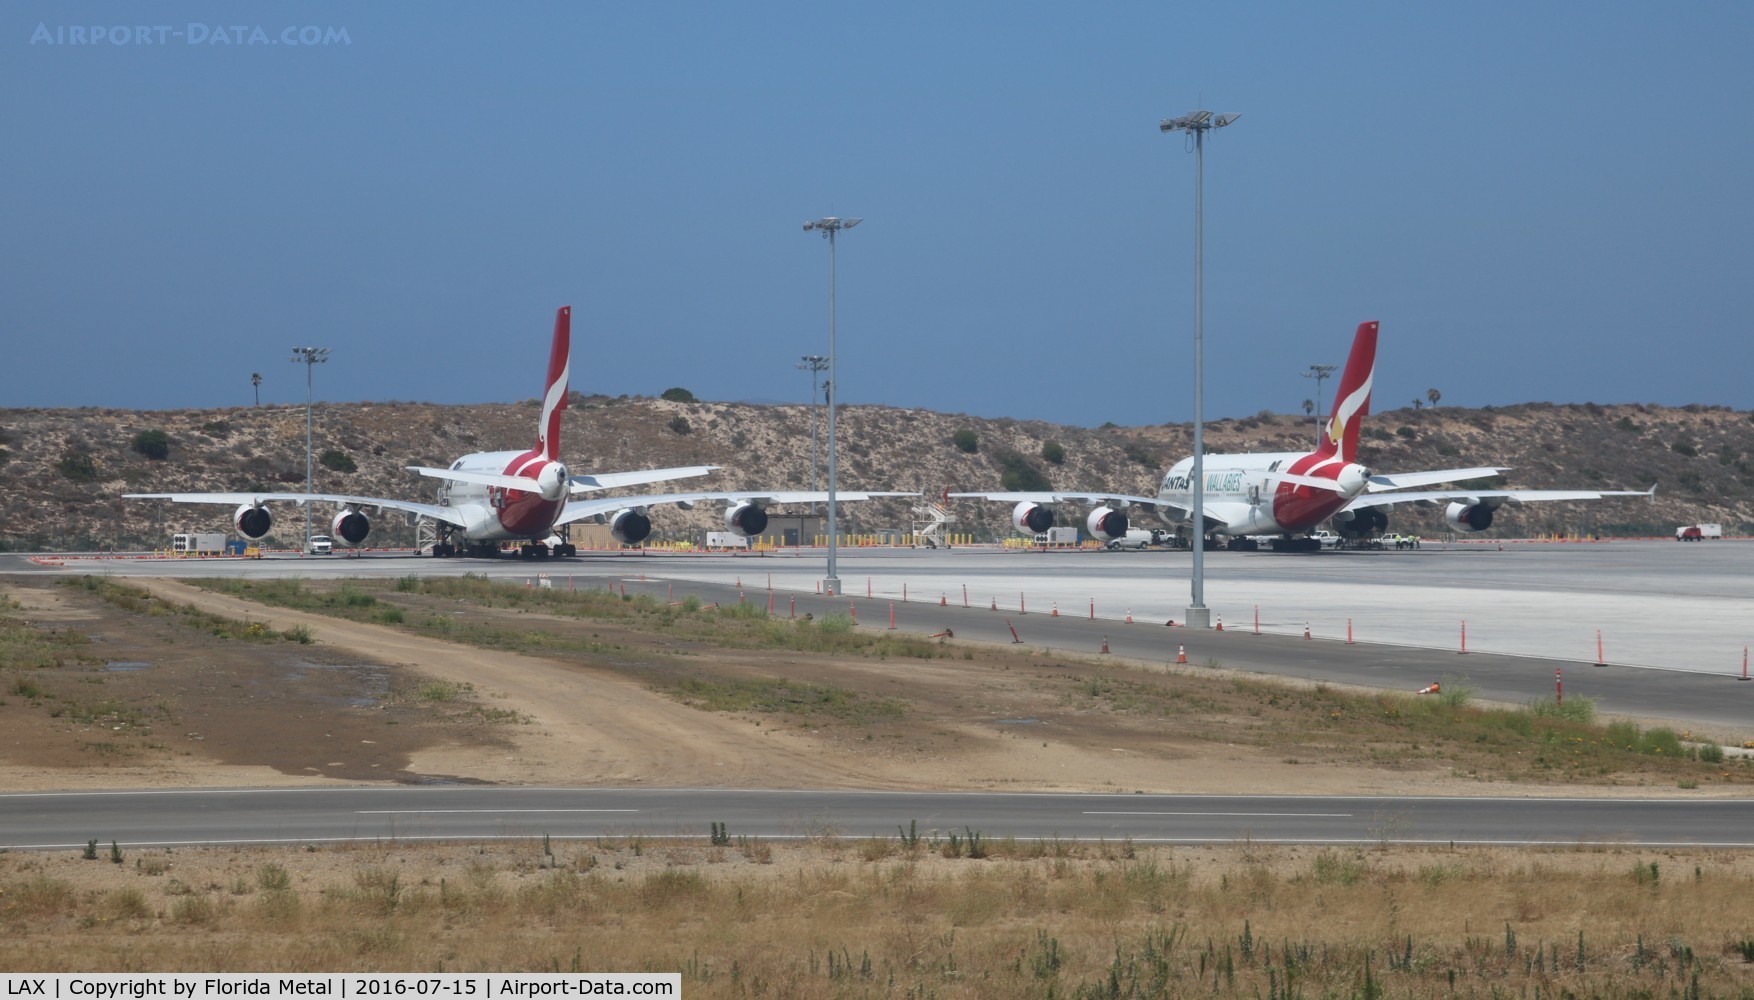 Los Angeles International Airport (LAX) - Qantas A380 parking